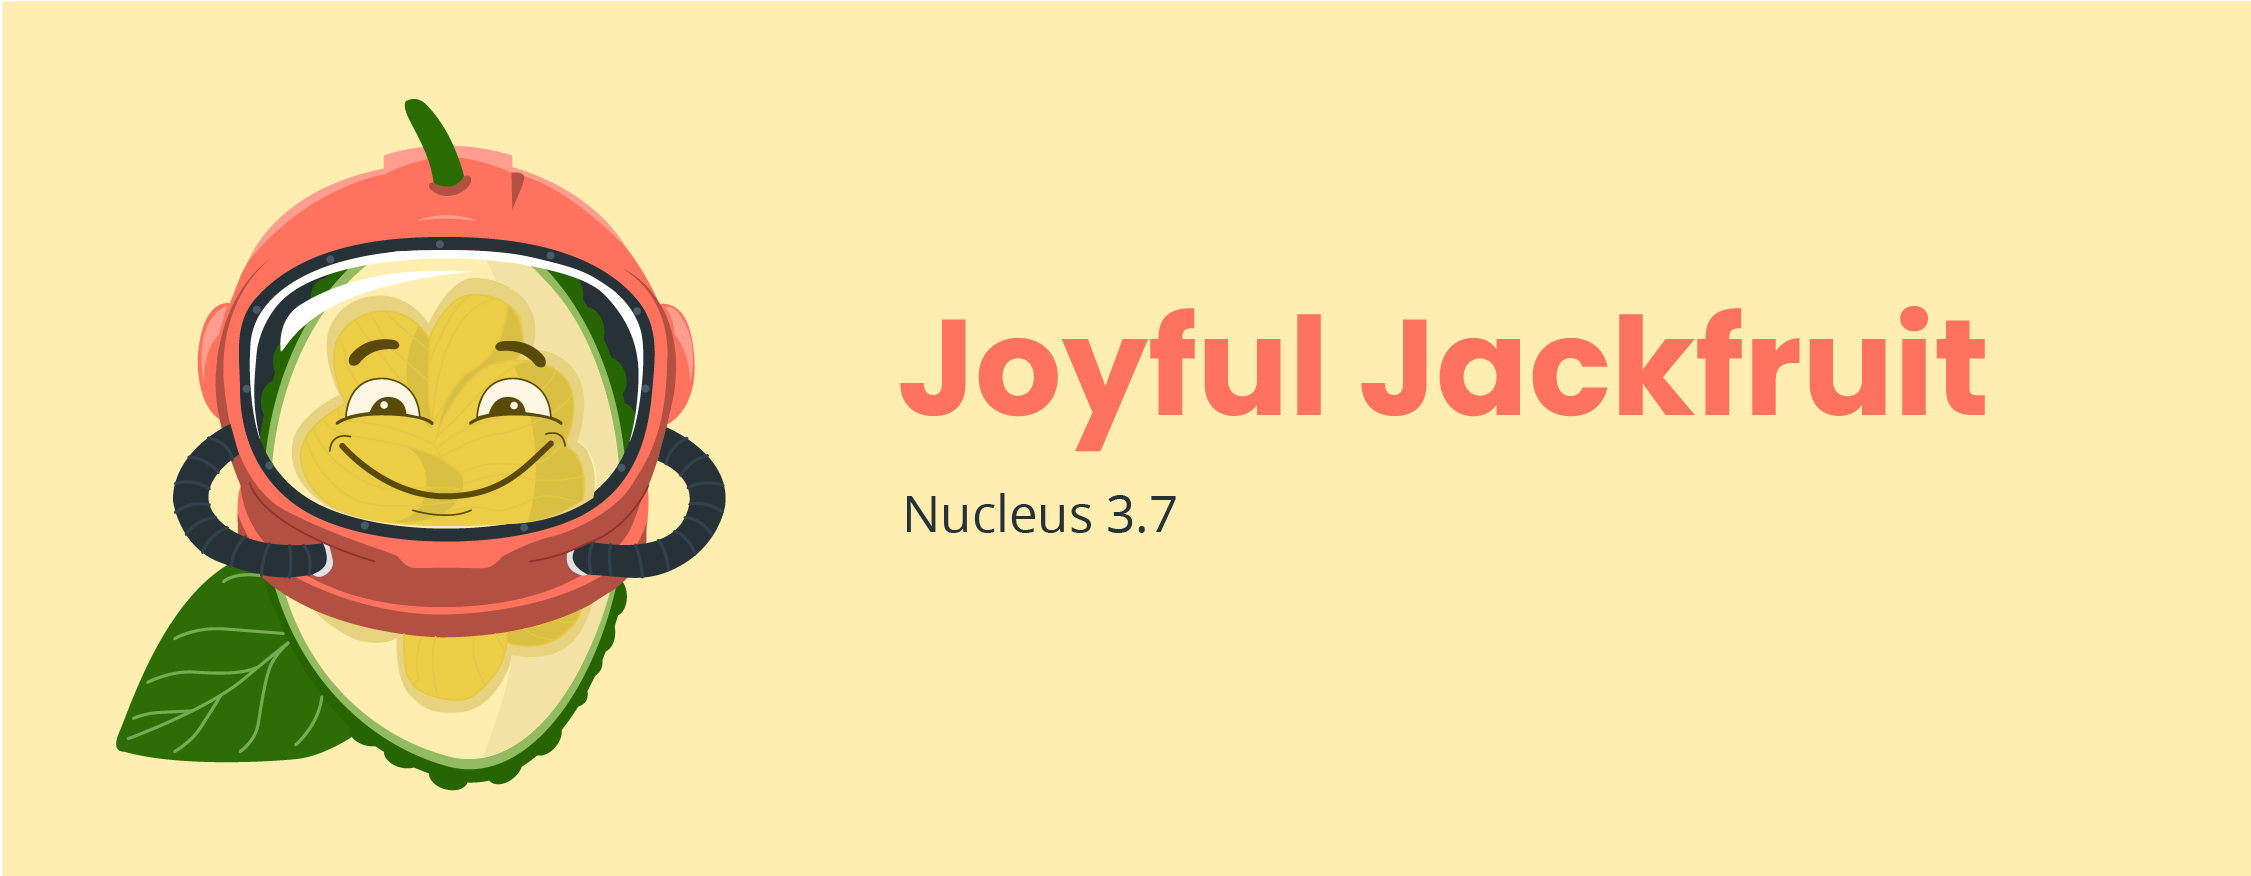 joyful-jackfruit-3.7-release-02.png